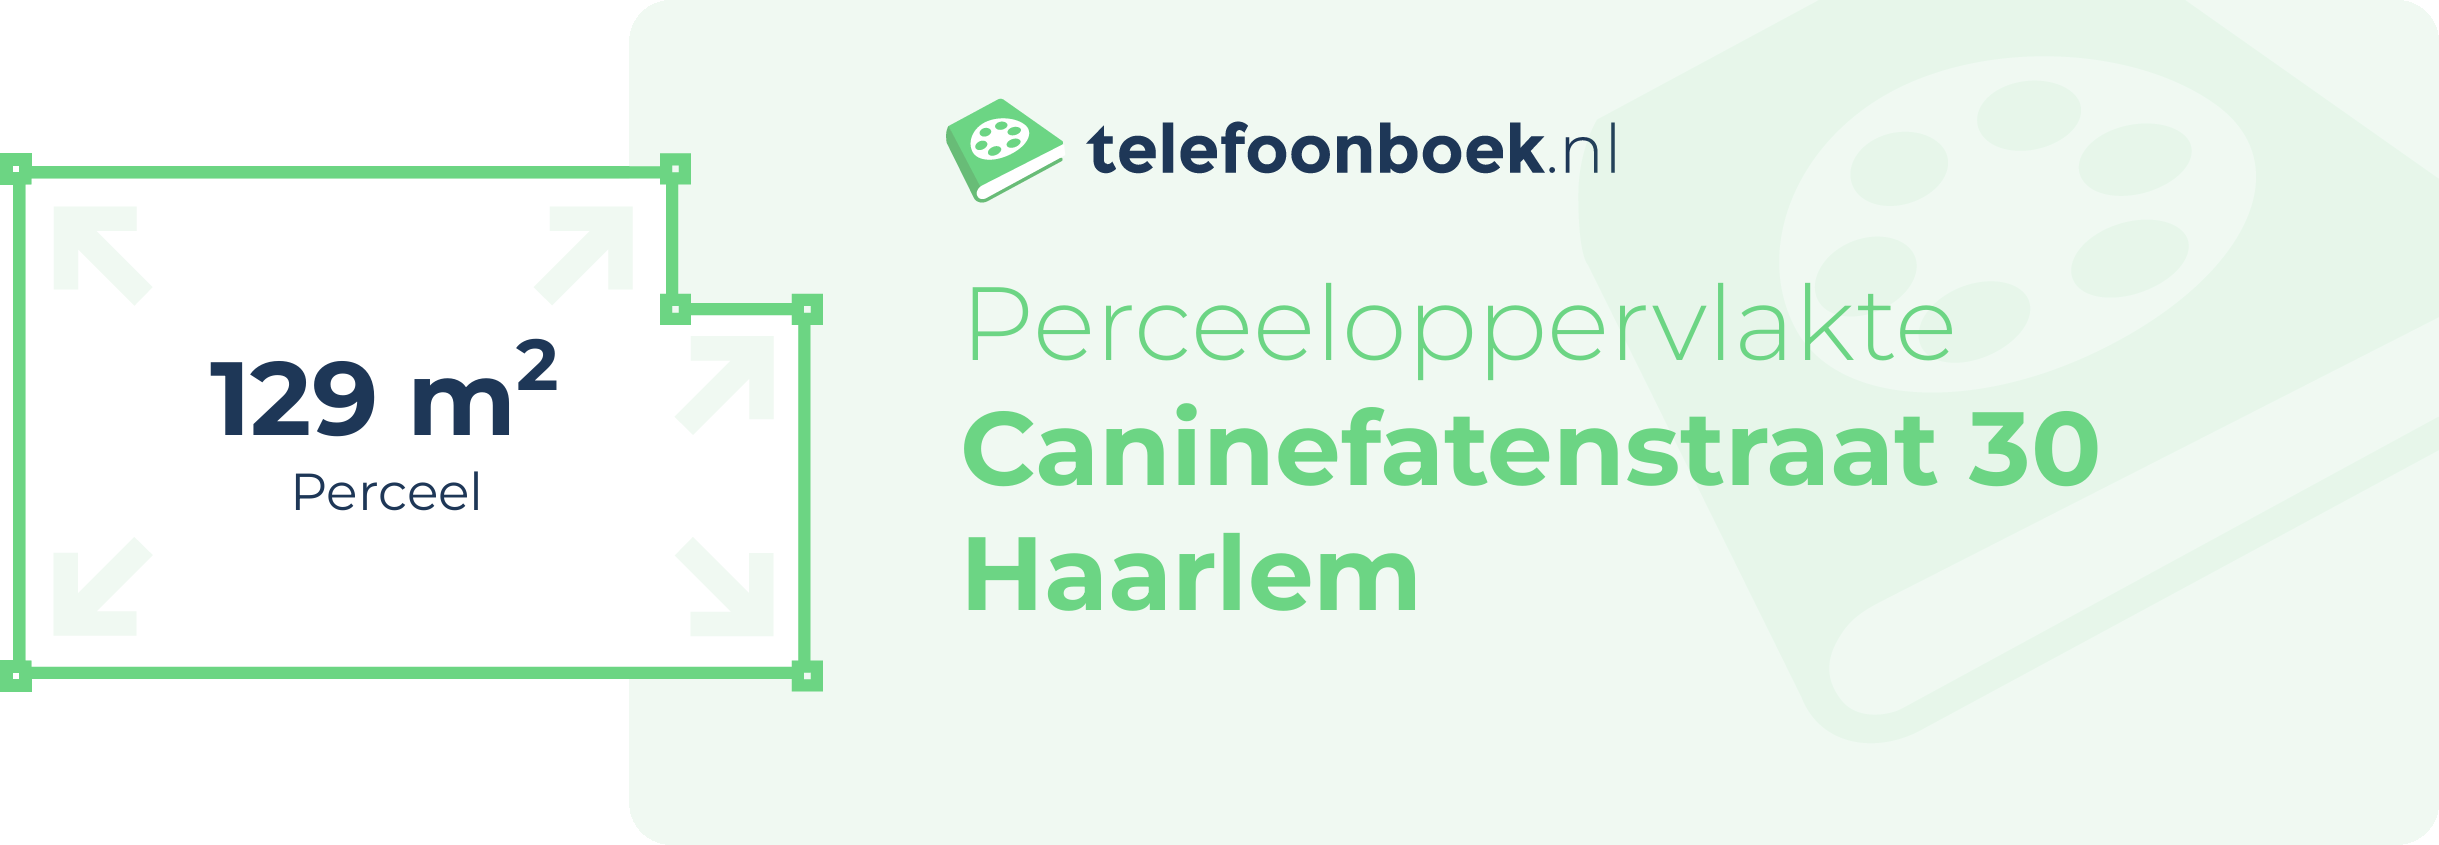 Perceeloppervlakte Caninefatenstraat 30 Haarlem